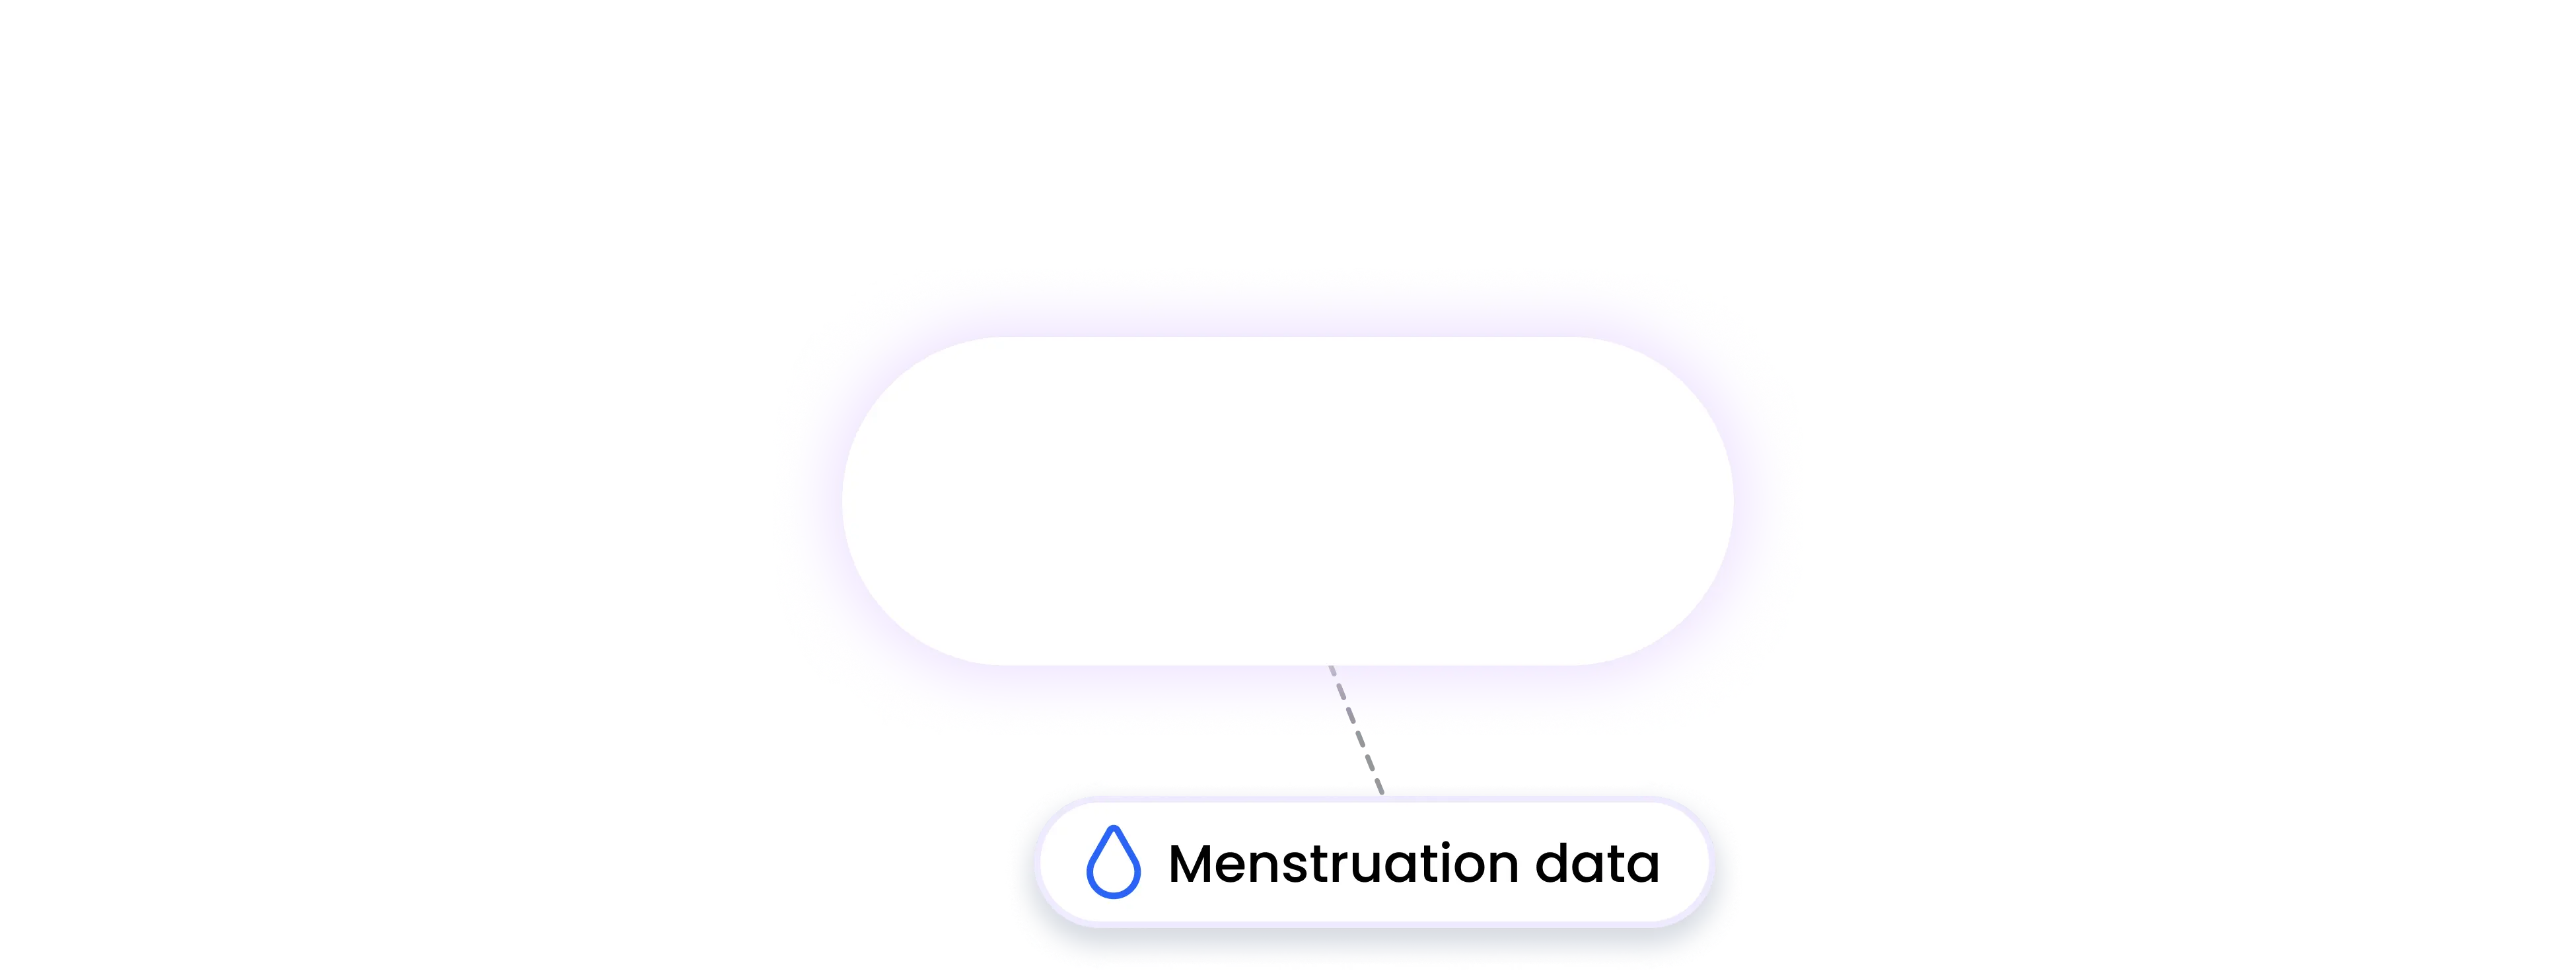 core integration MENSTRUATION data